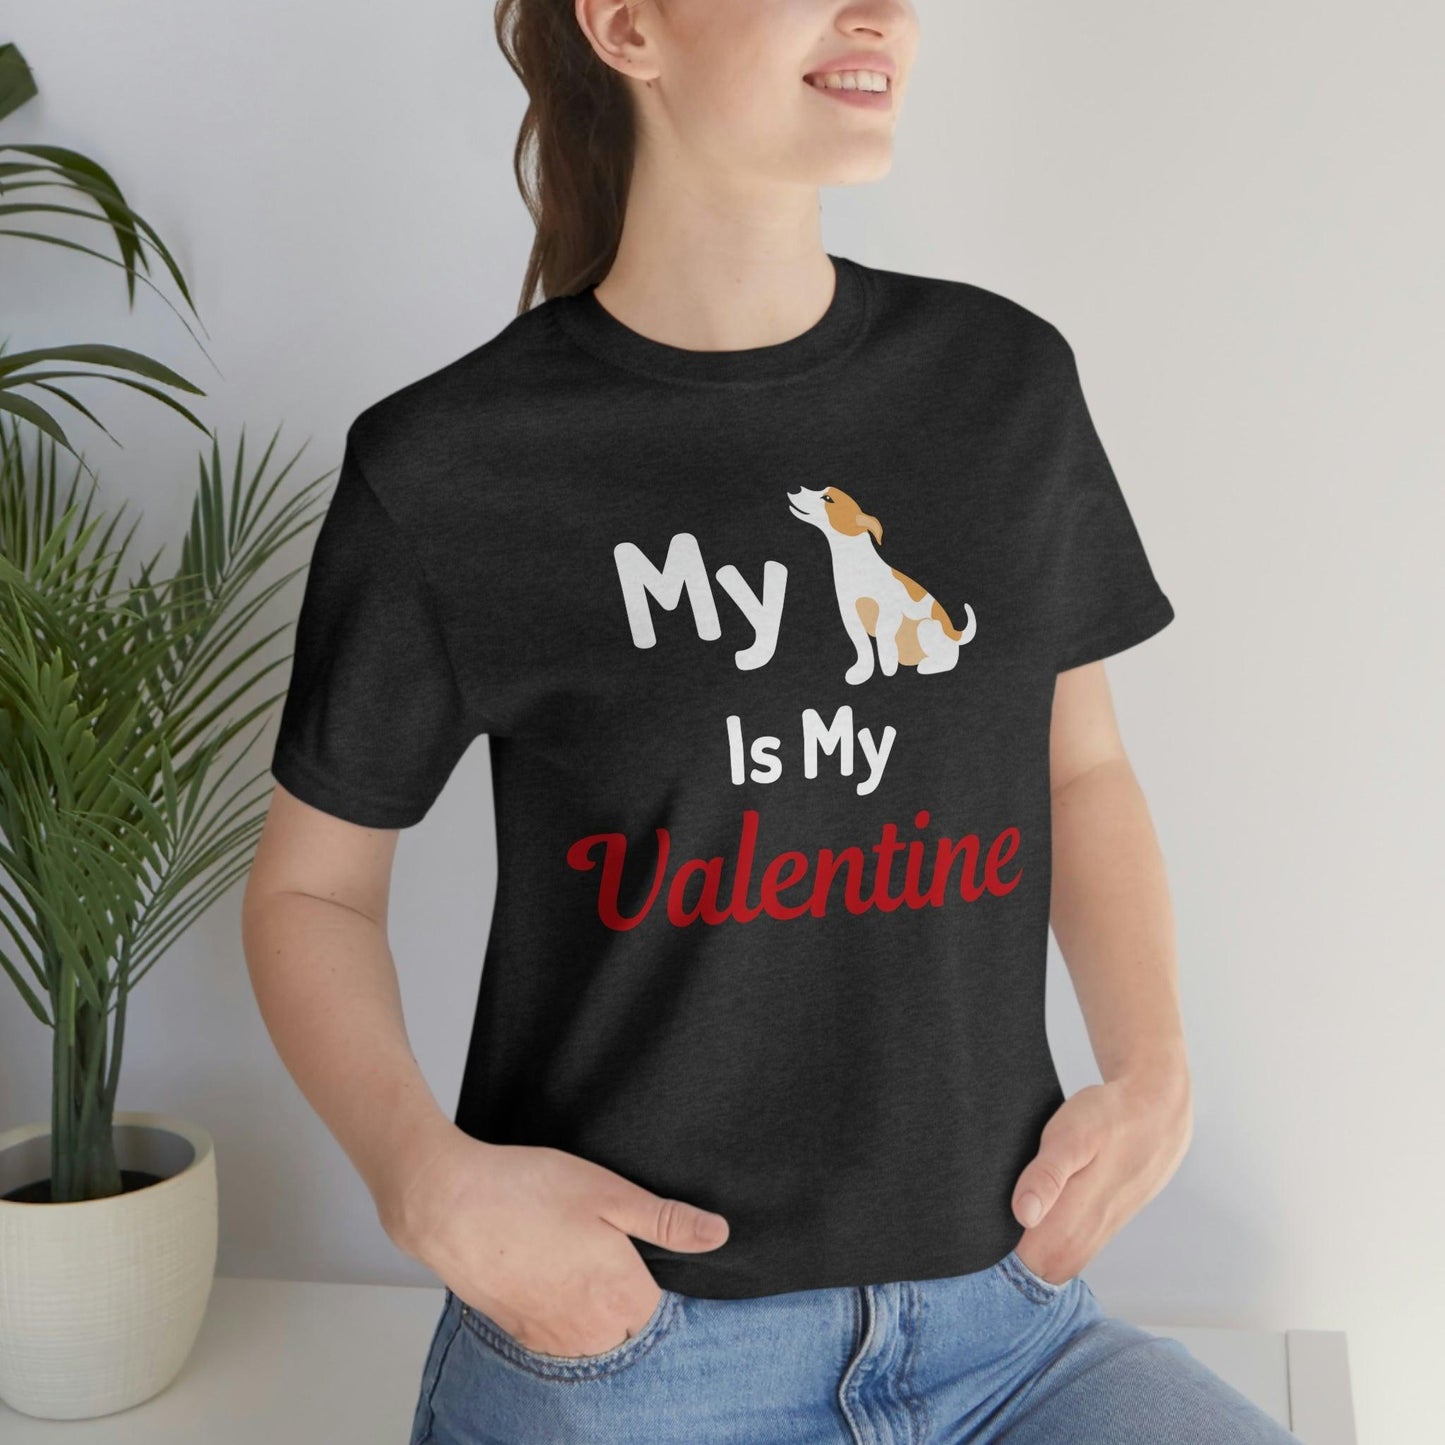 My Dog is my Valentine shirt - Pet lover shirt - dog lover shirt